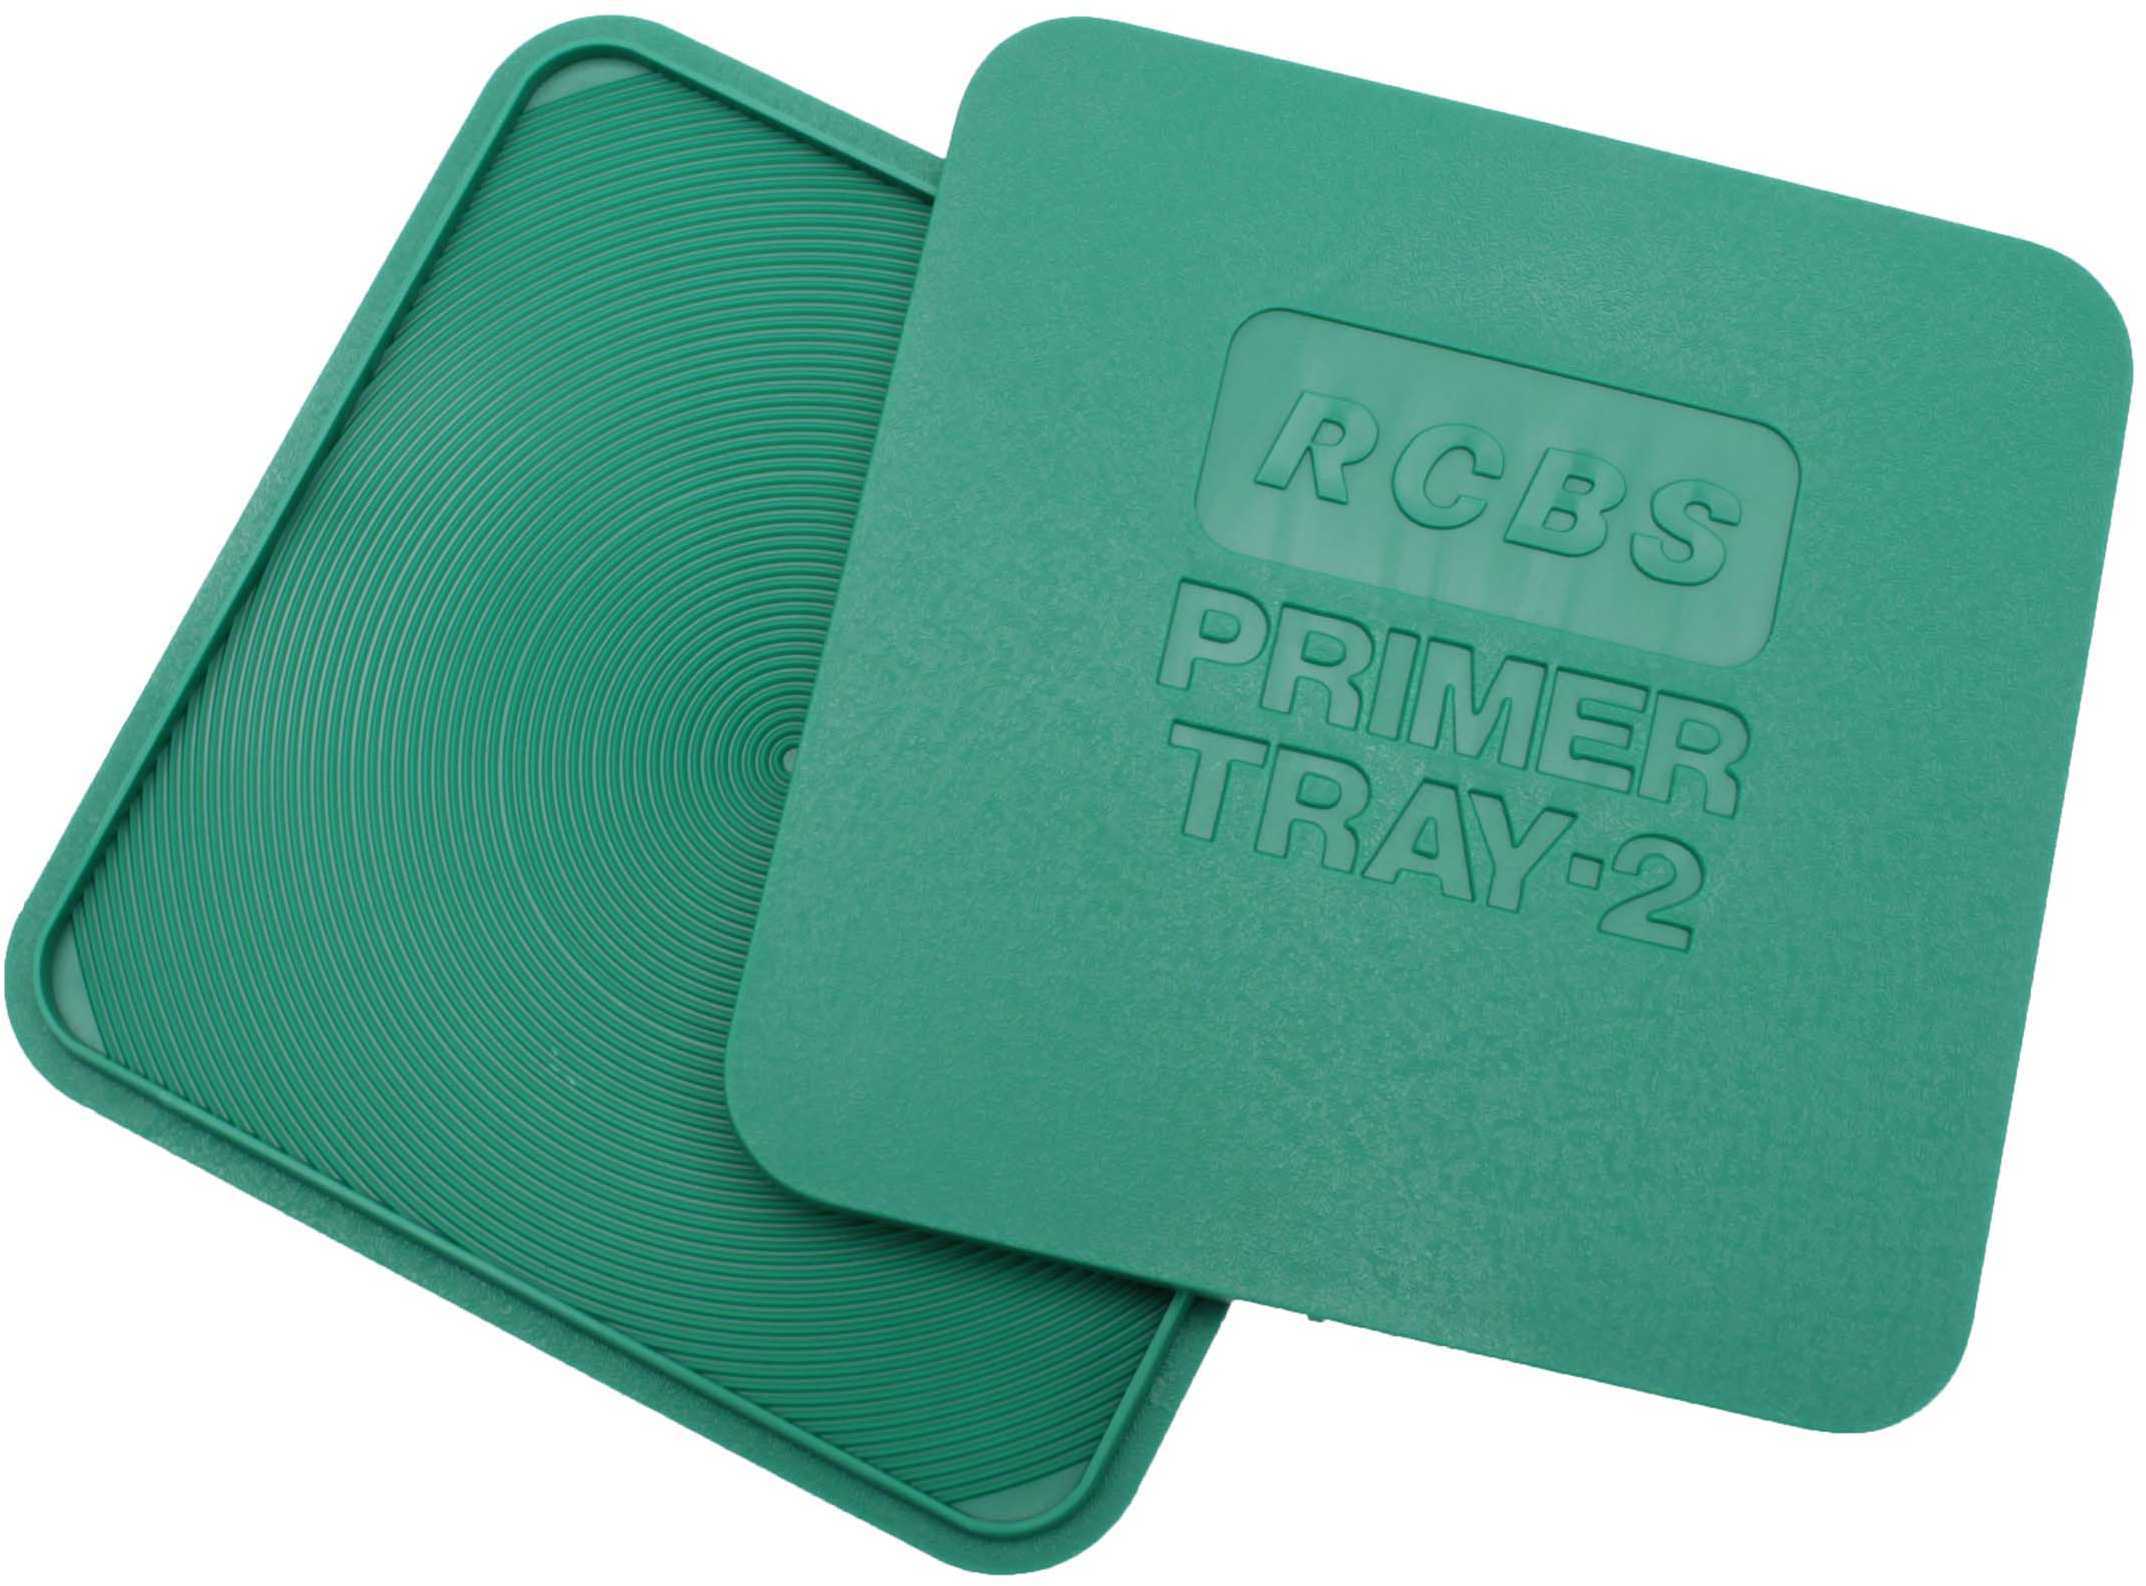 RCBS Primer Tray-2 09480